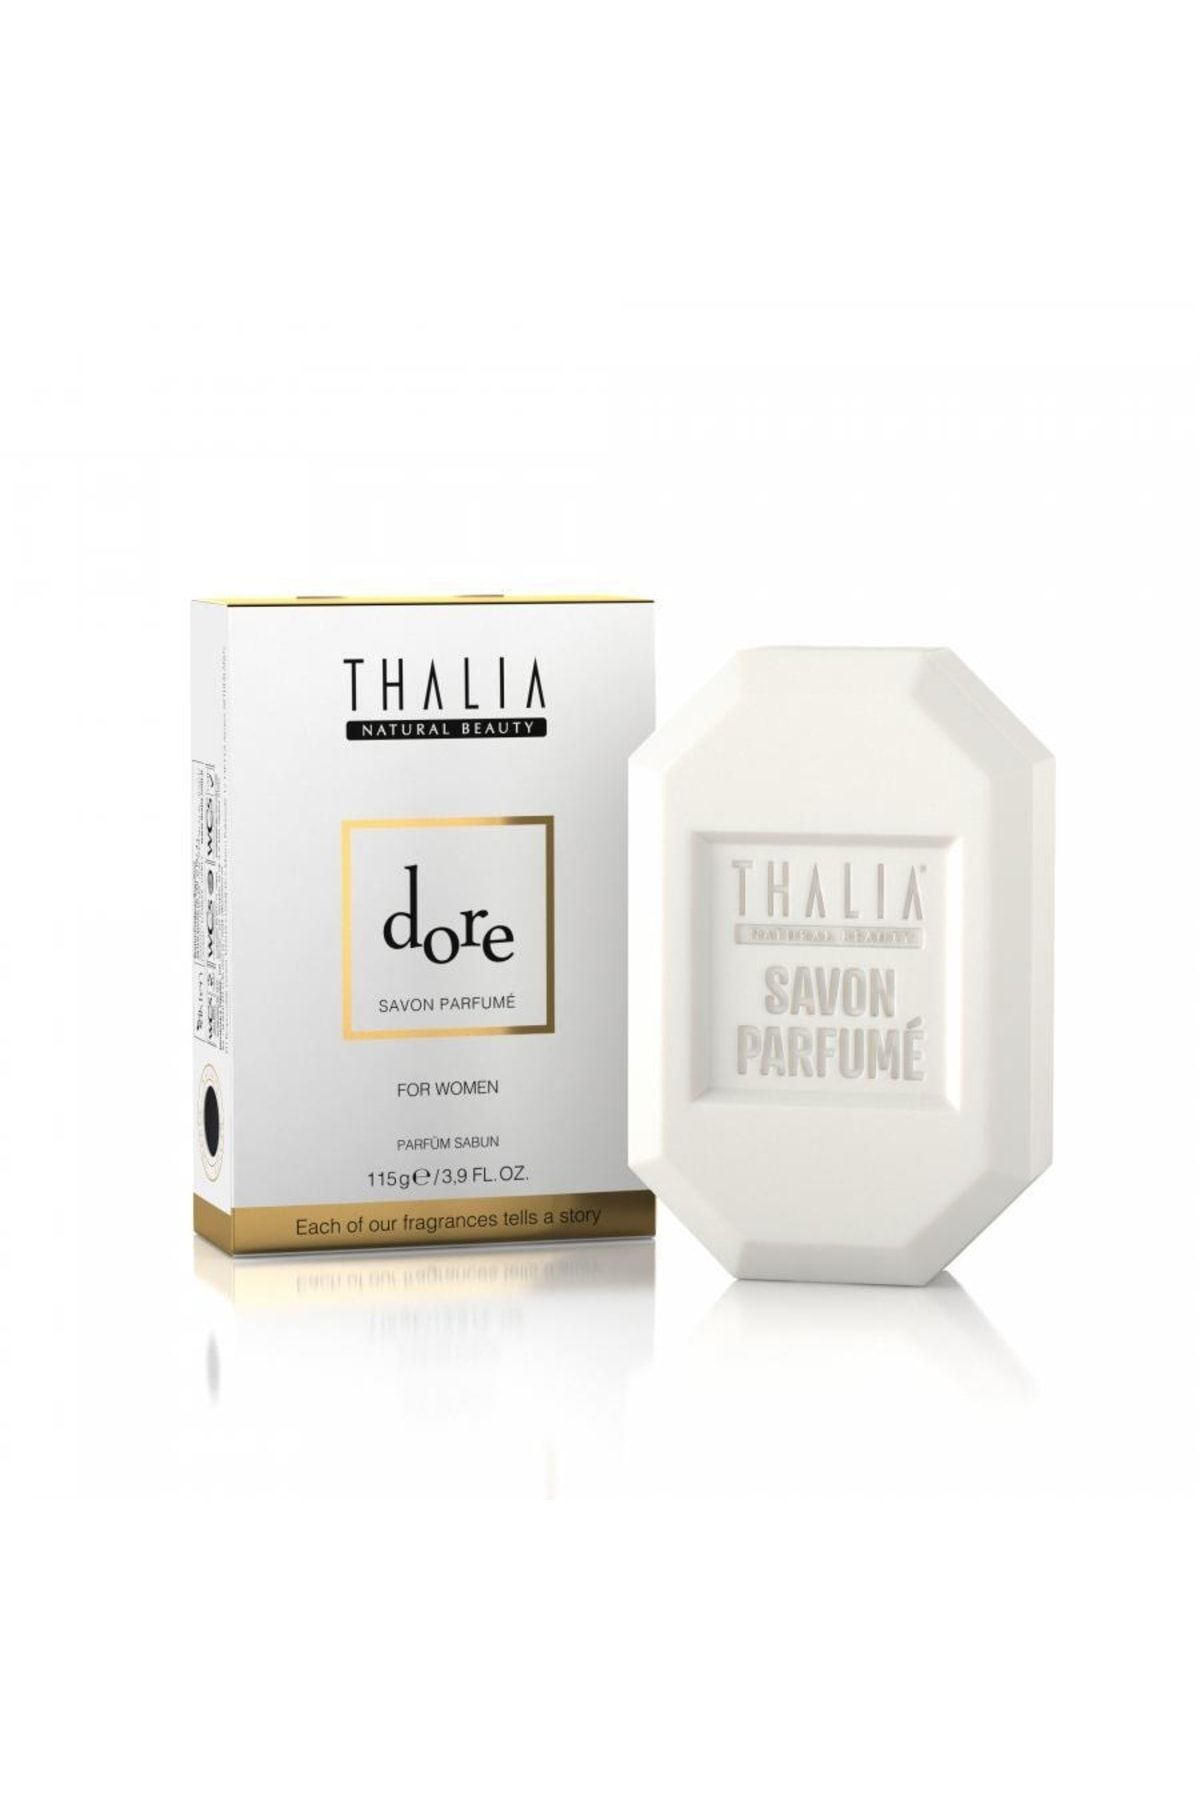 Thalia Dore Parfüm Sabun For Women - 115 gr